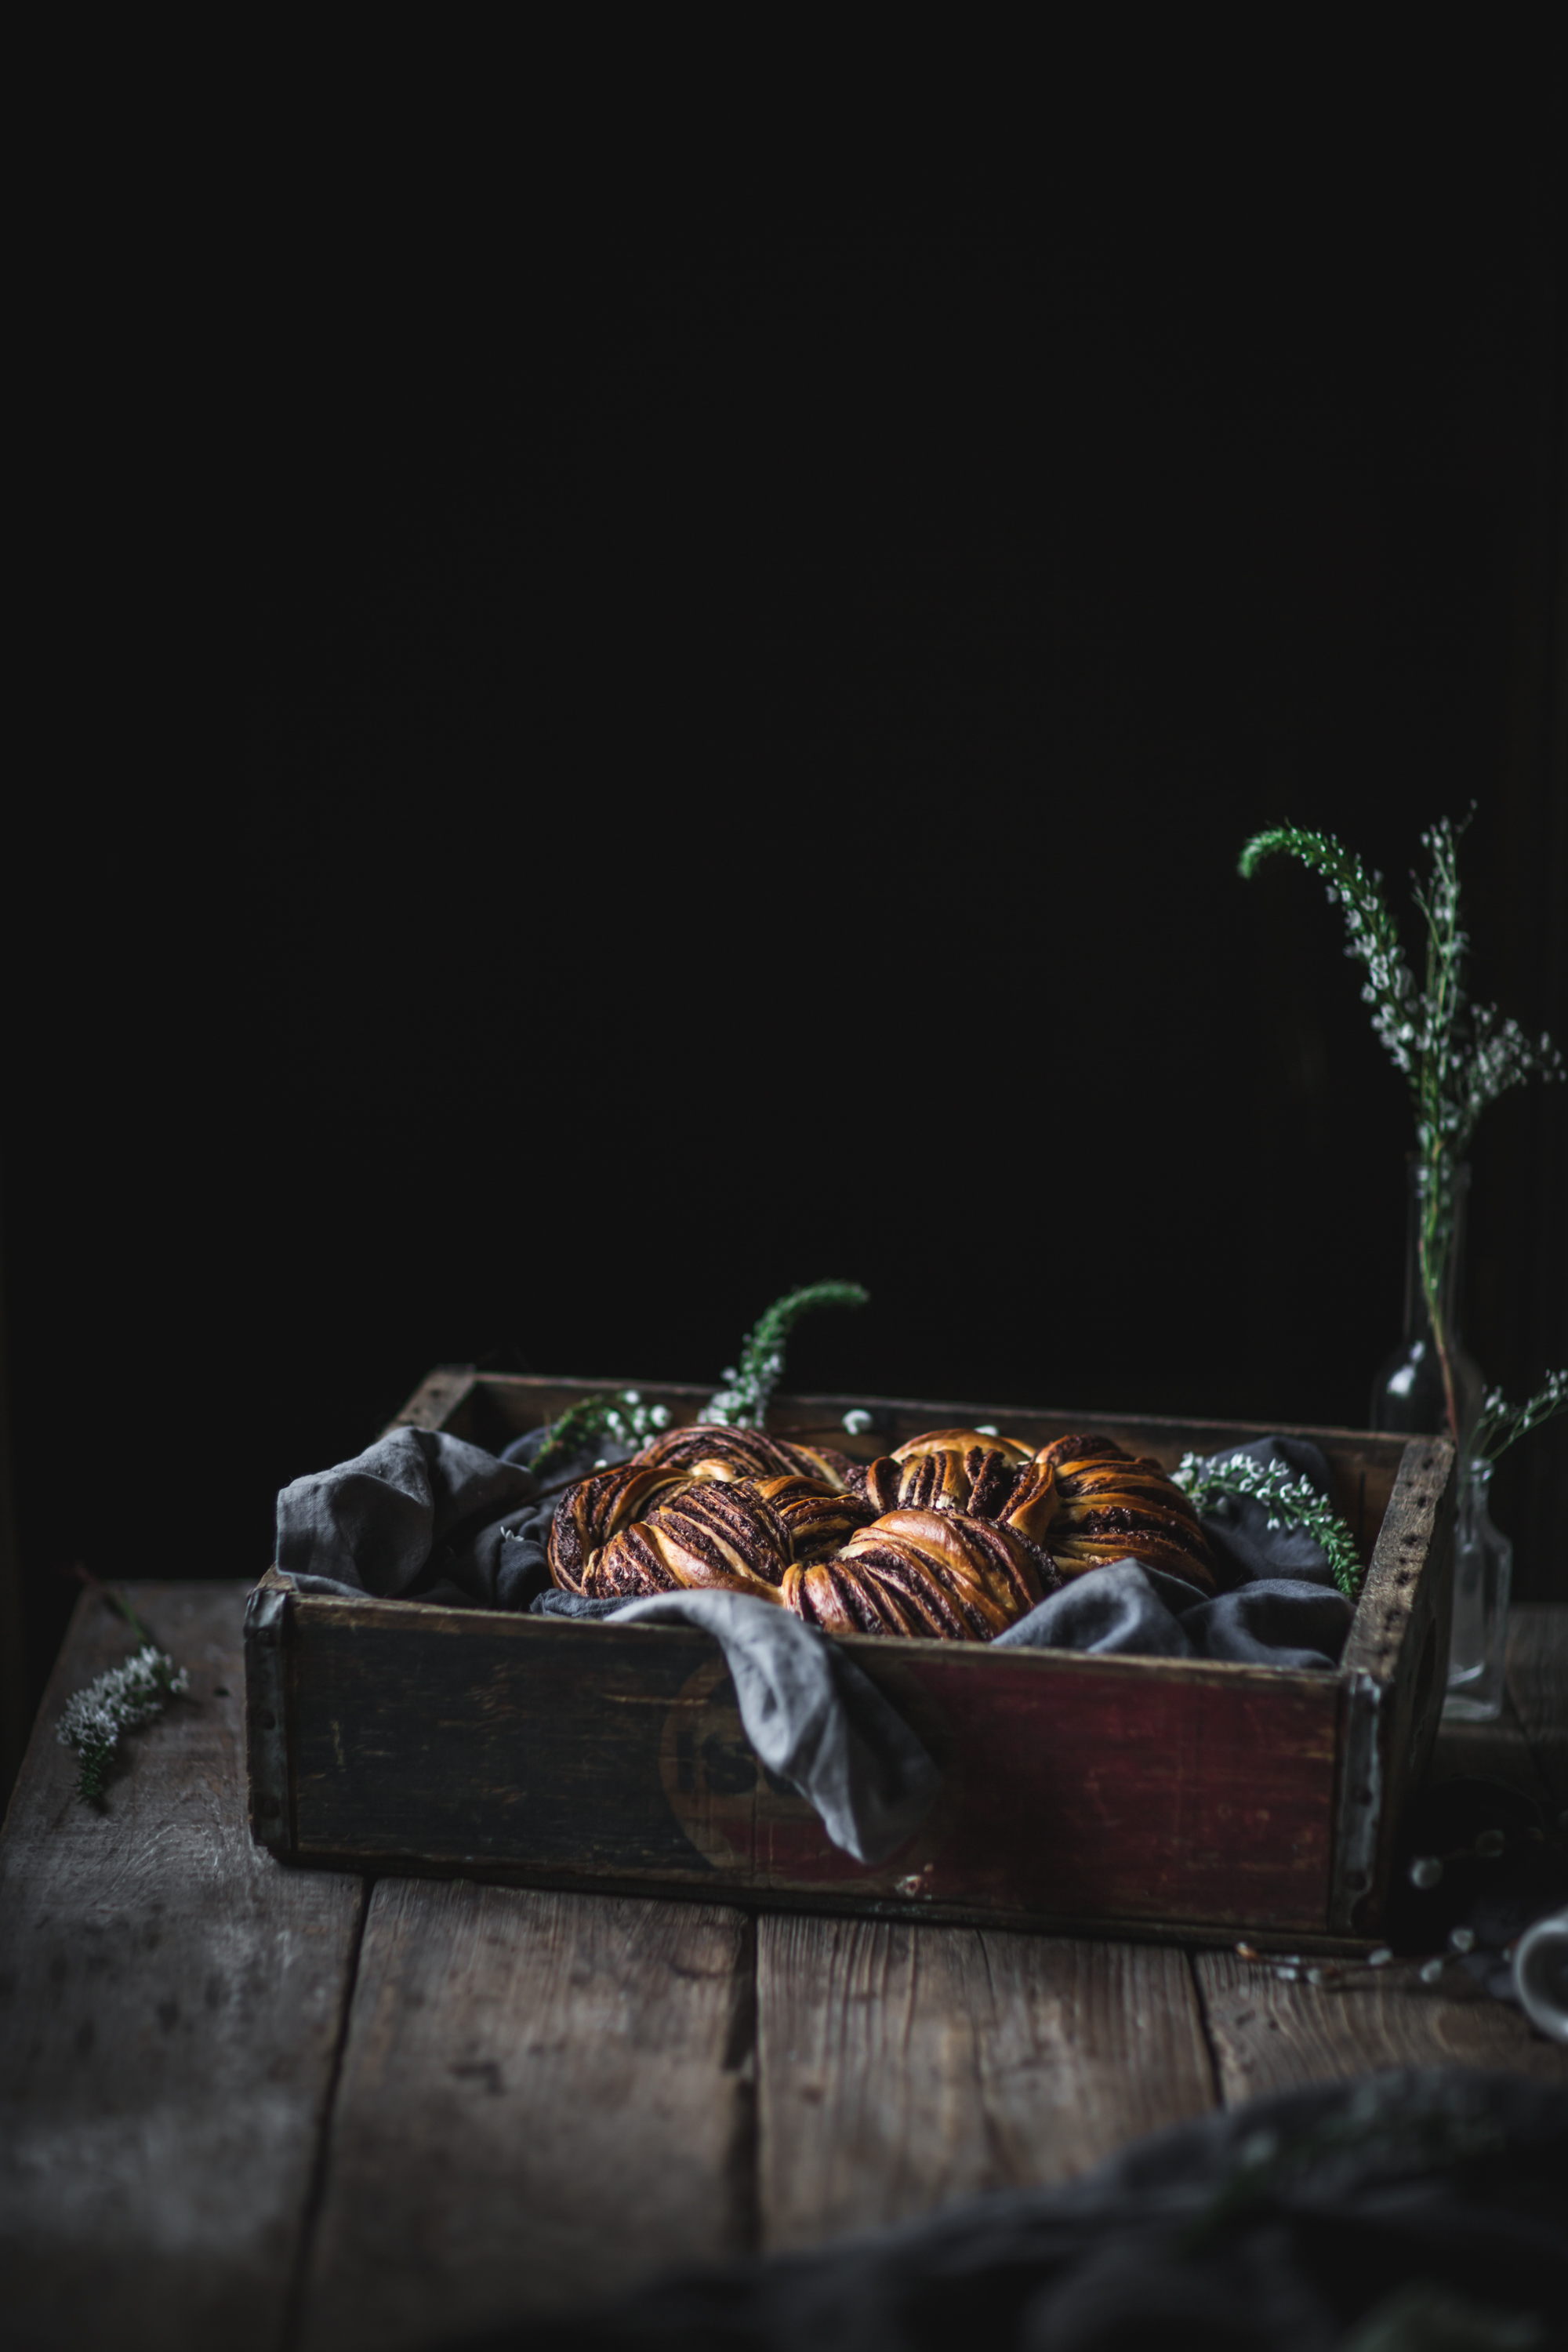 Woven Chocolate Cinnamon Bread by Eva Kosmas Flores